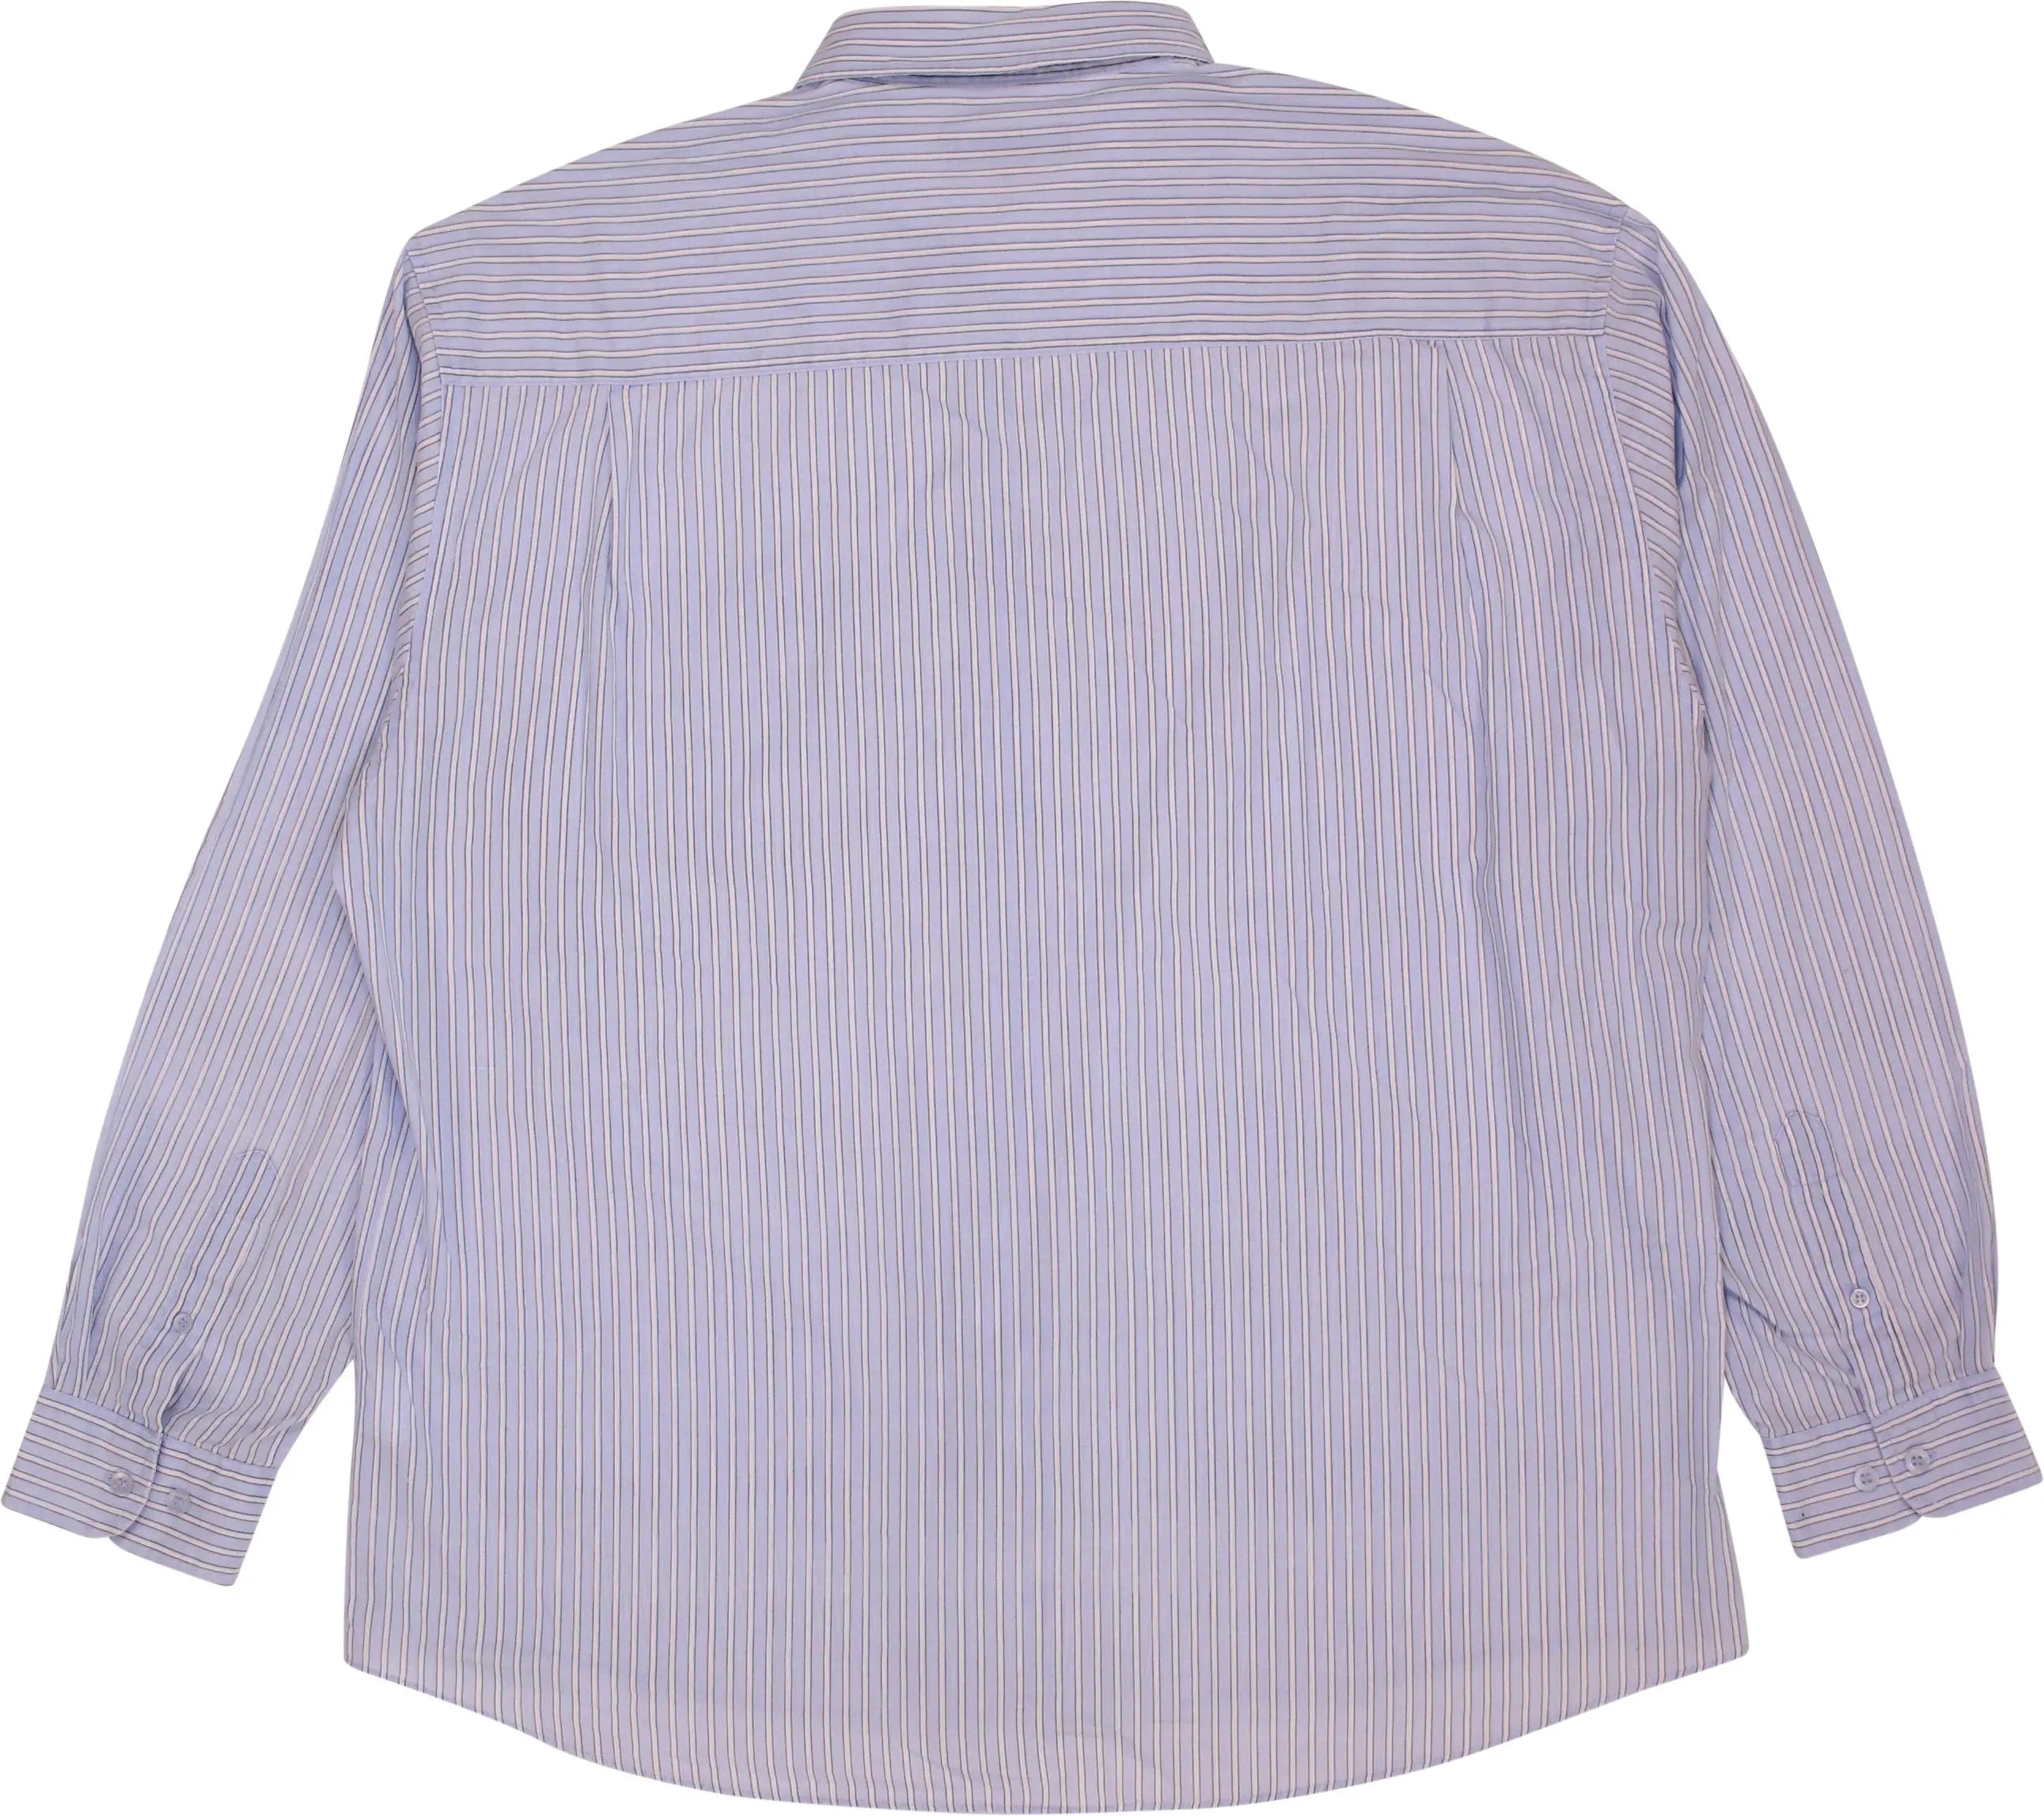 Portonova - Striped Long Sleeve Shirt- ThriftTale.com - Vintage and second handclothing